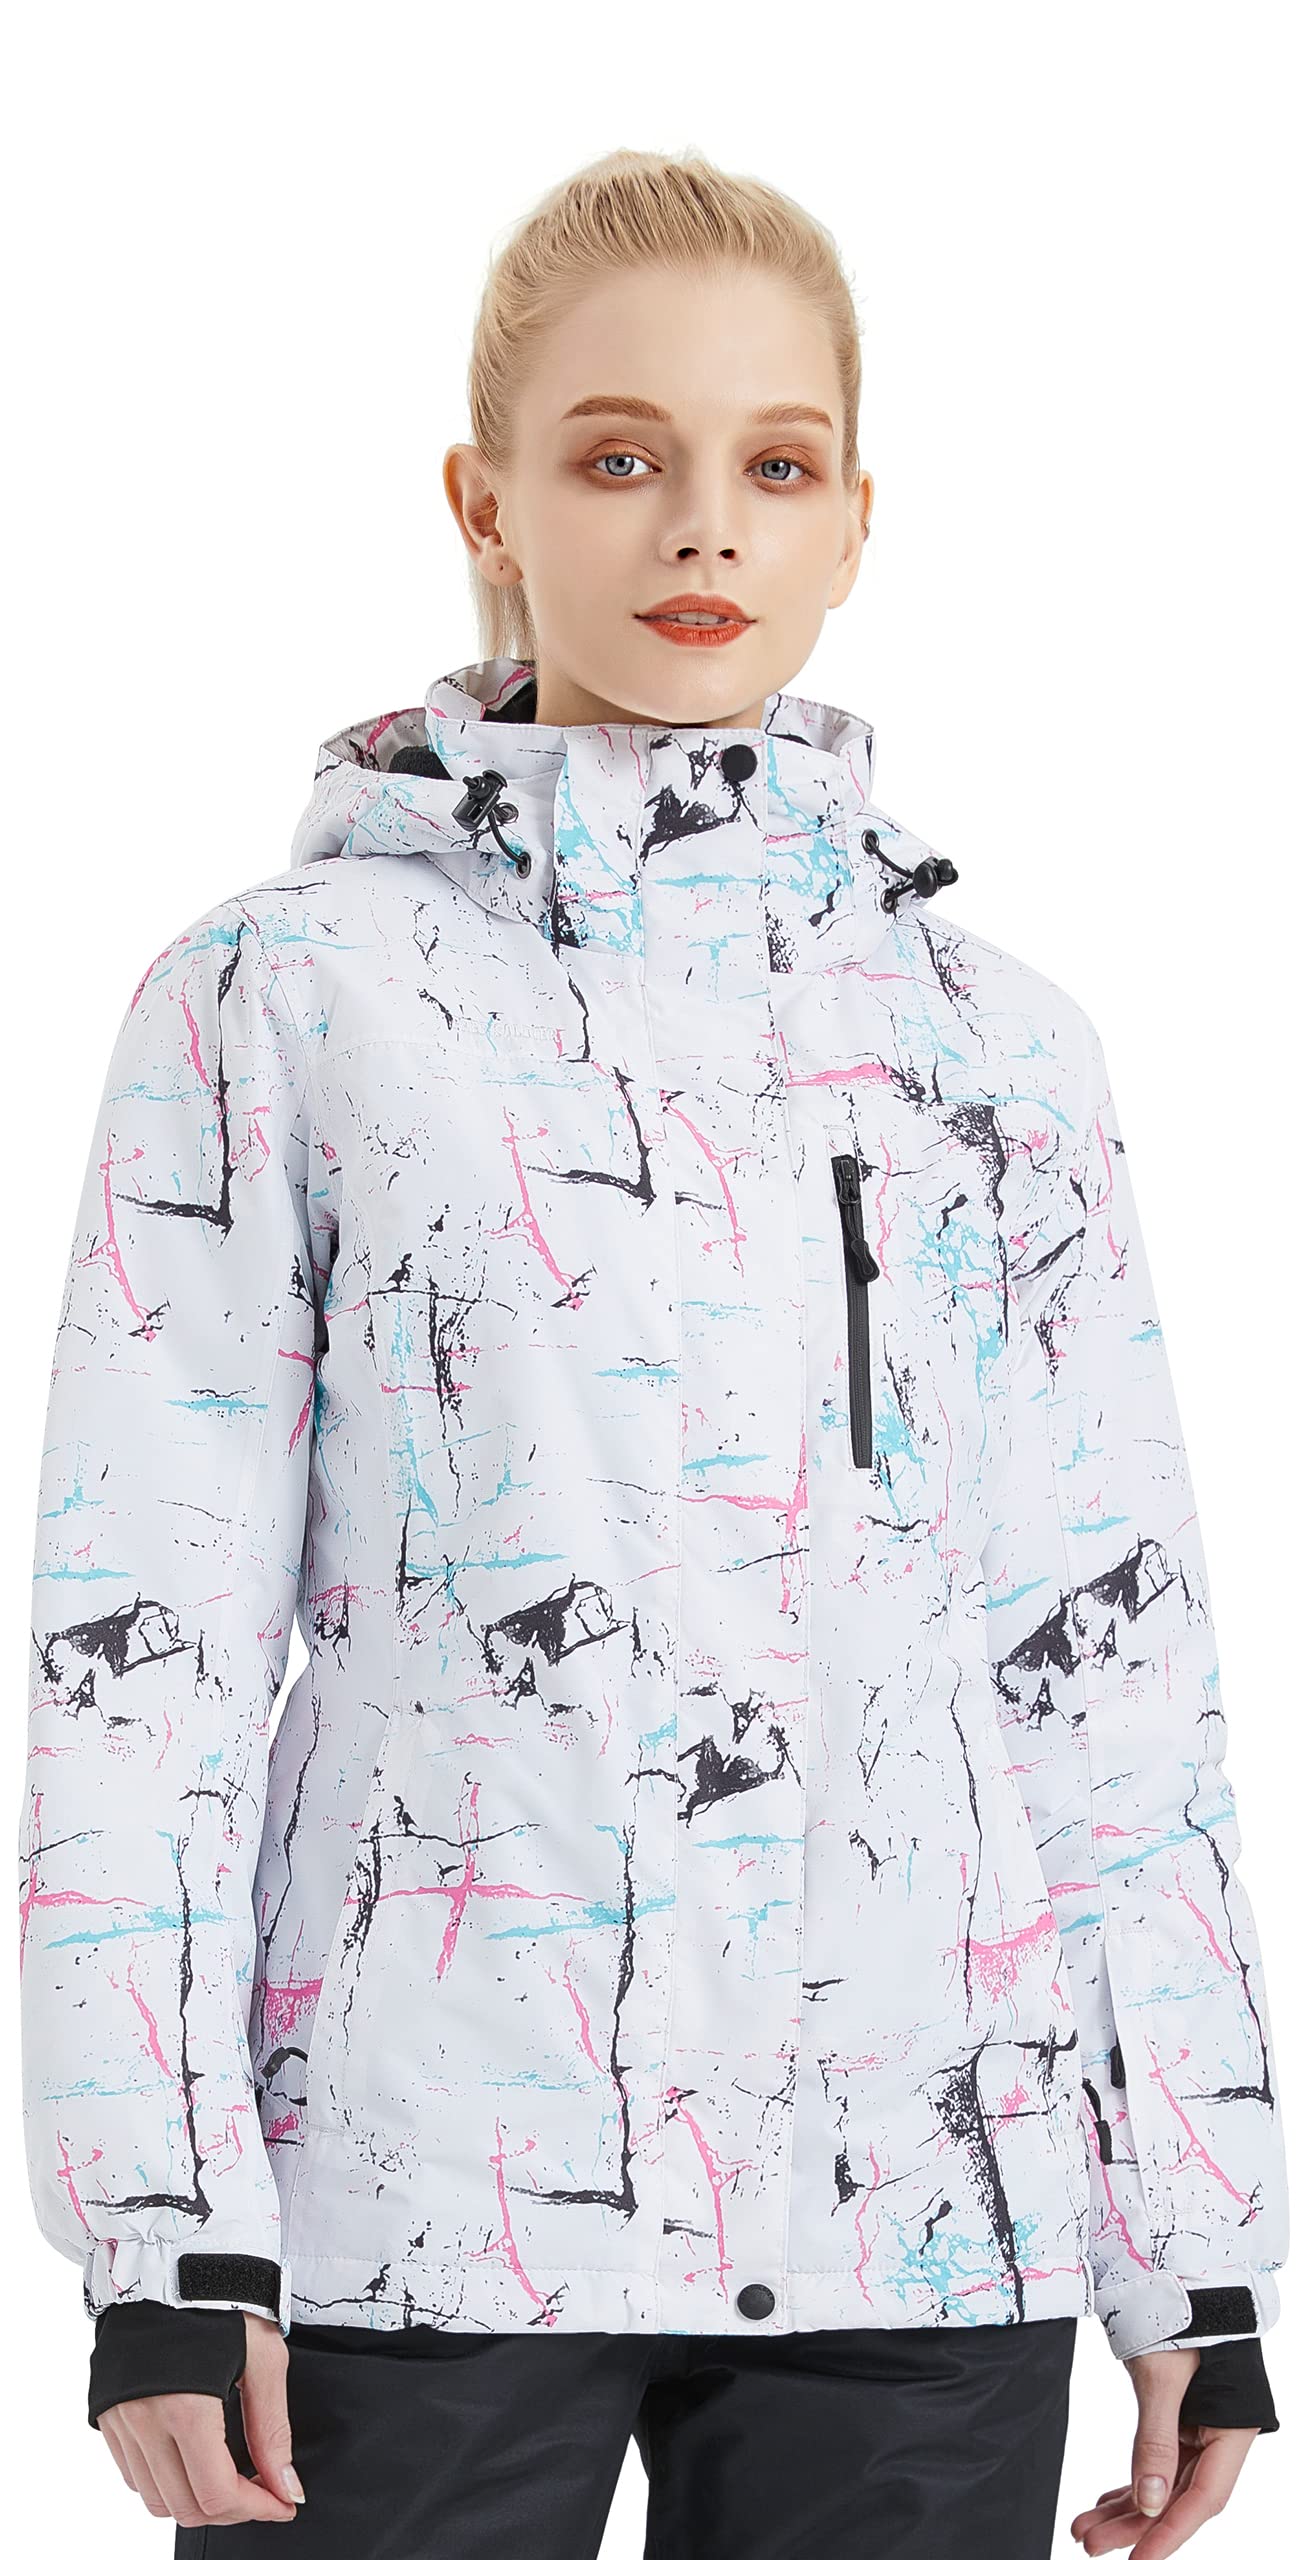 FREE SOLDIER Womens Waterproof Ski Snow Jacket Fleece Lined Warm Winter Rain Jacket with Hood Fully Taped Seams(Floral Print,XL)